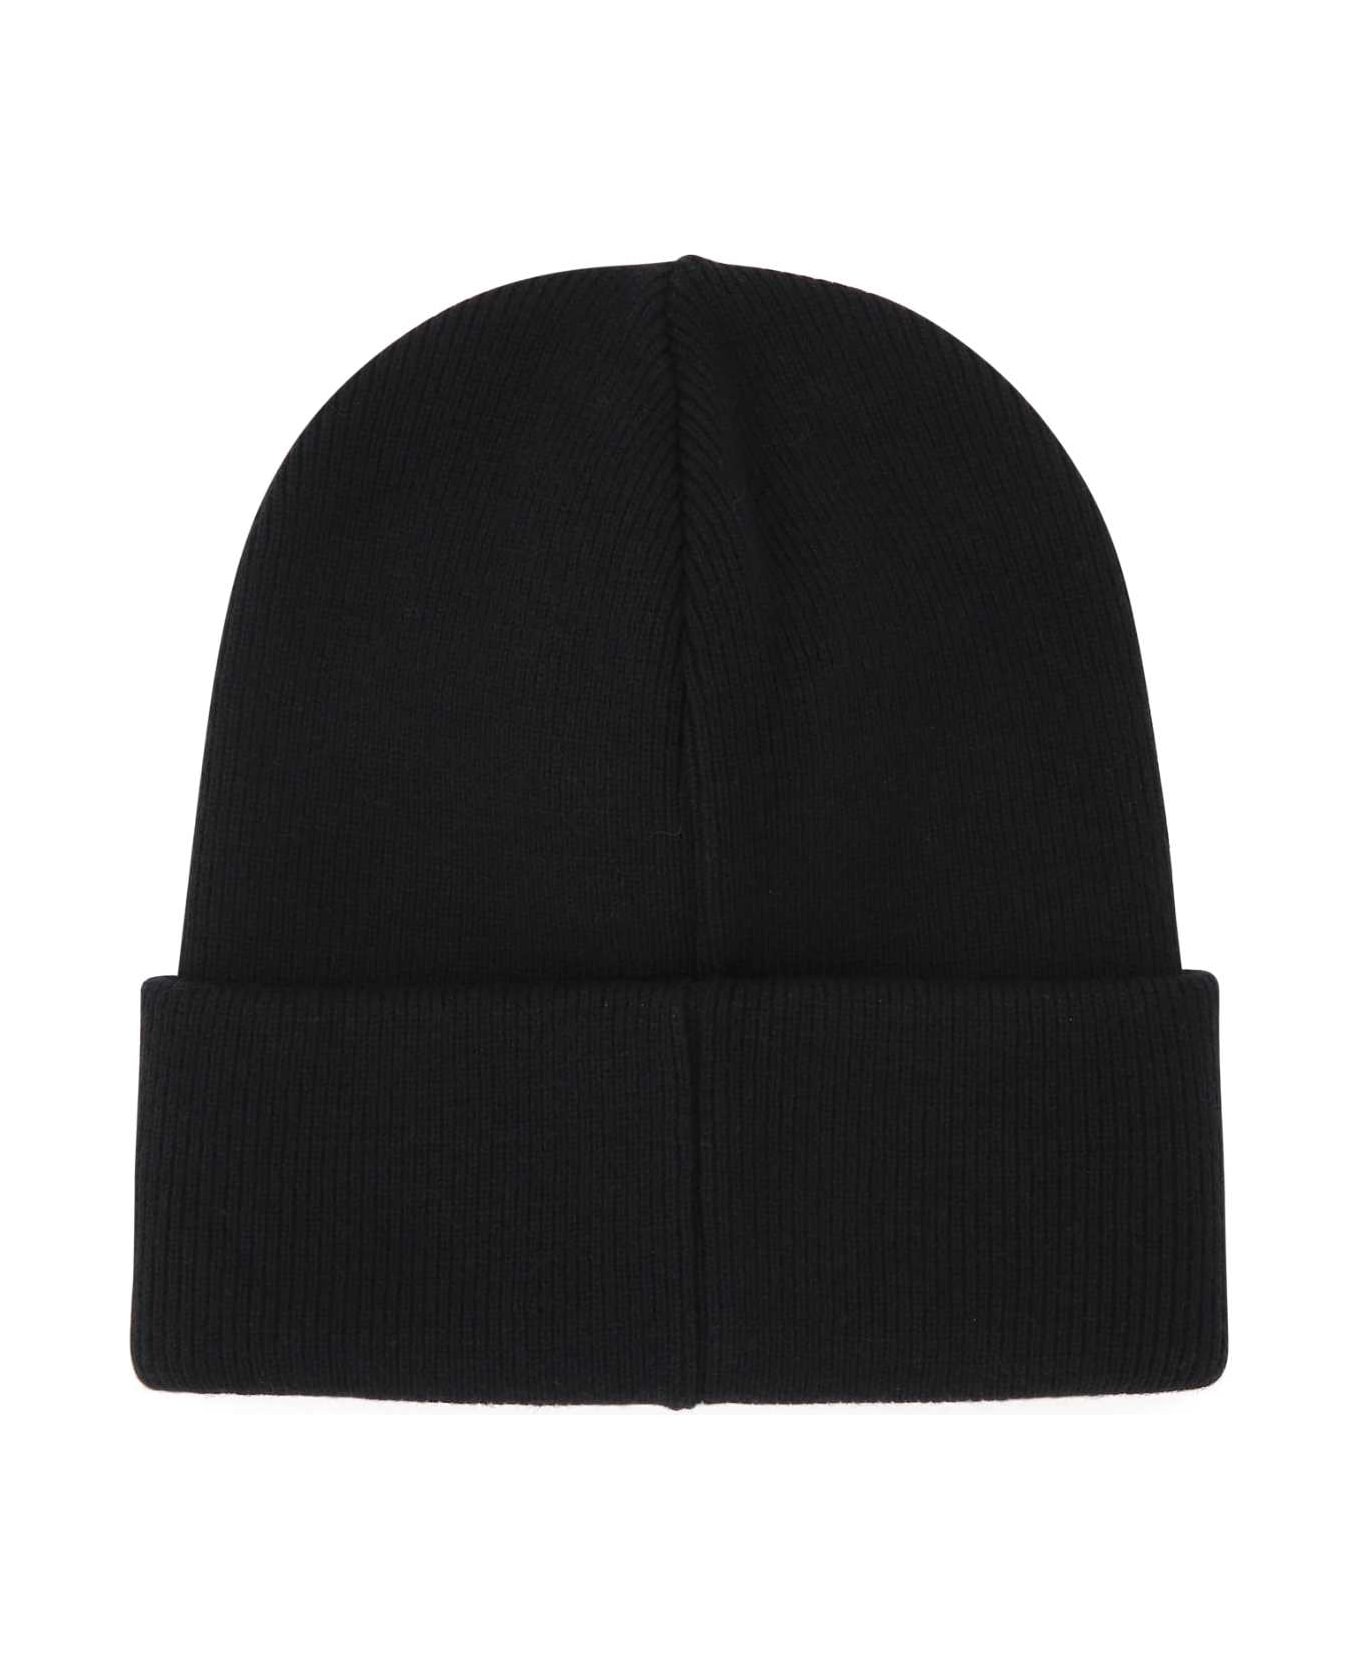 Dsquared2 Black Wool Beanie Hat - M063